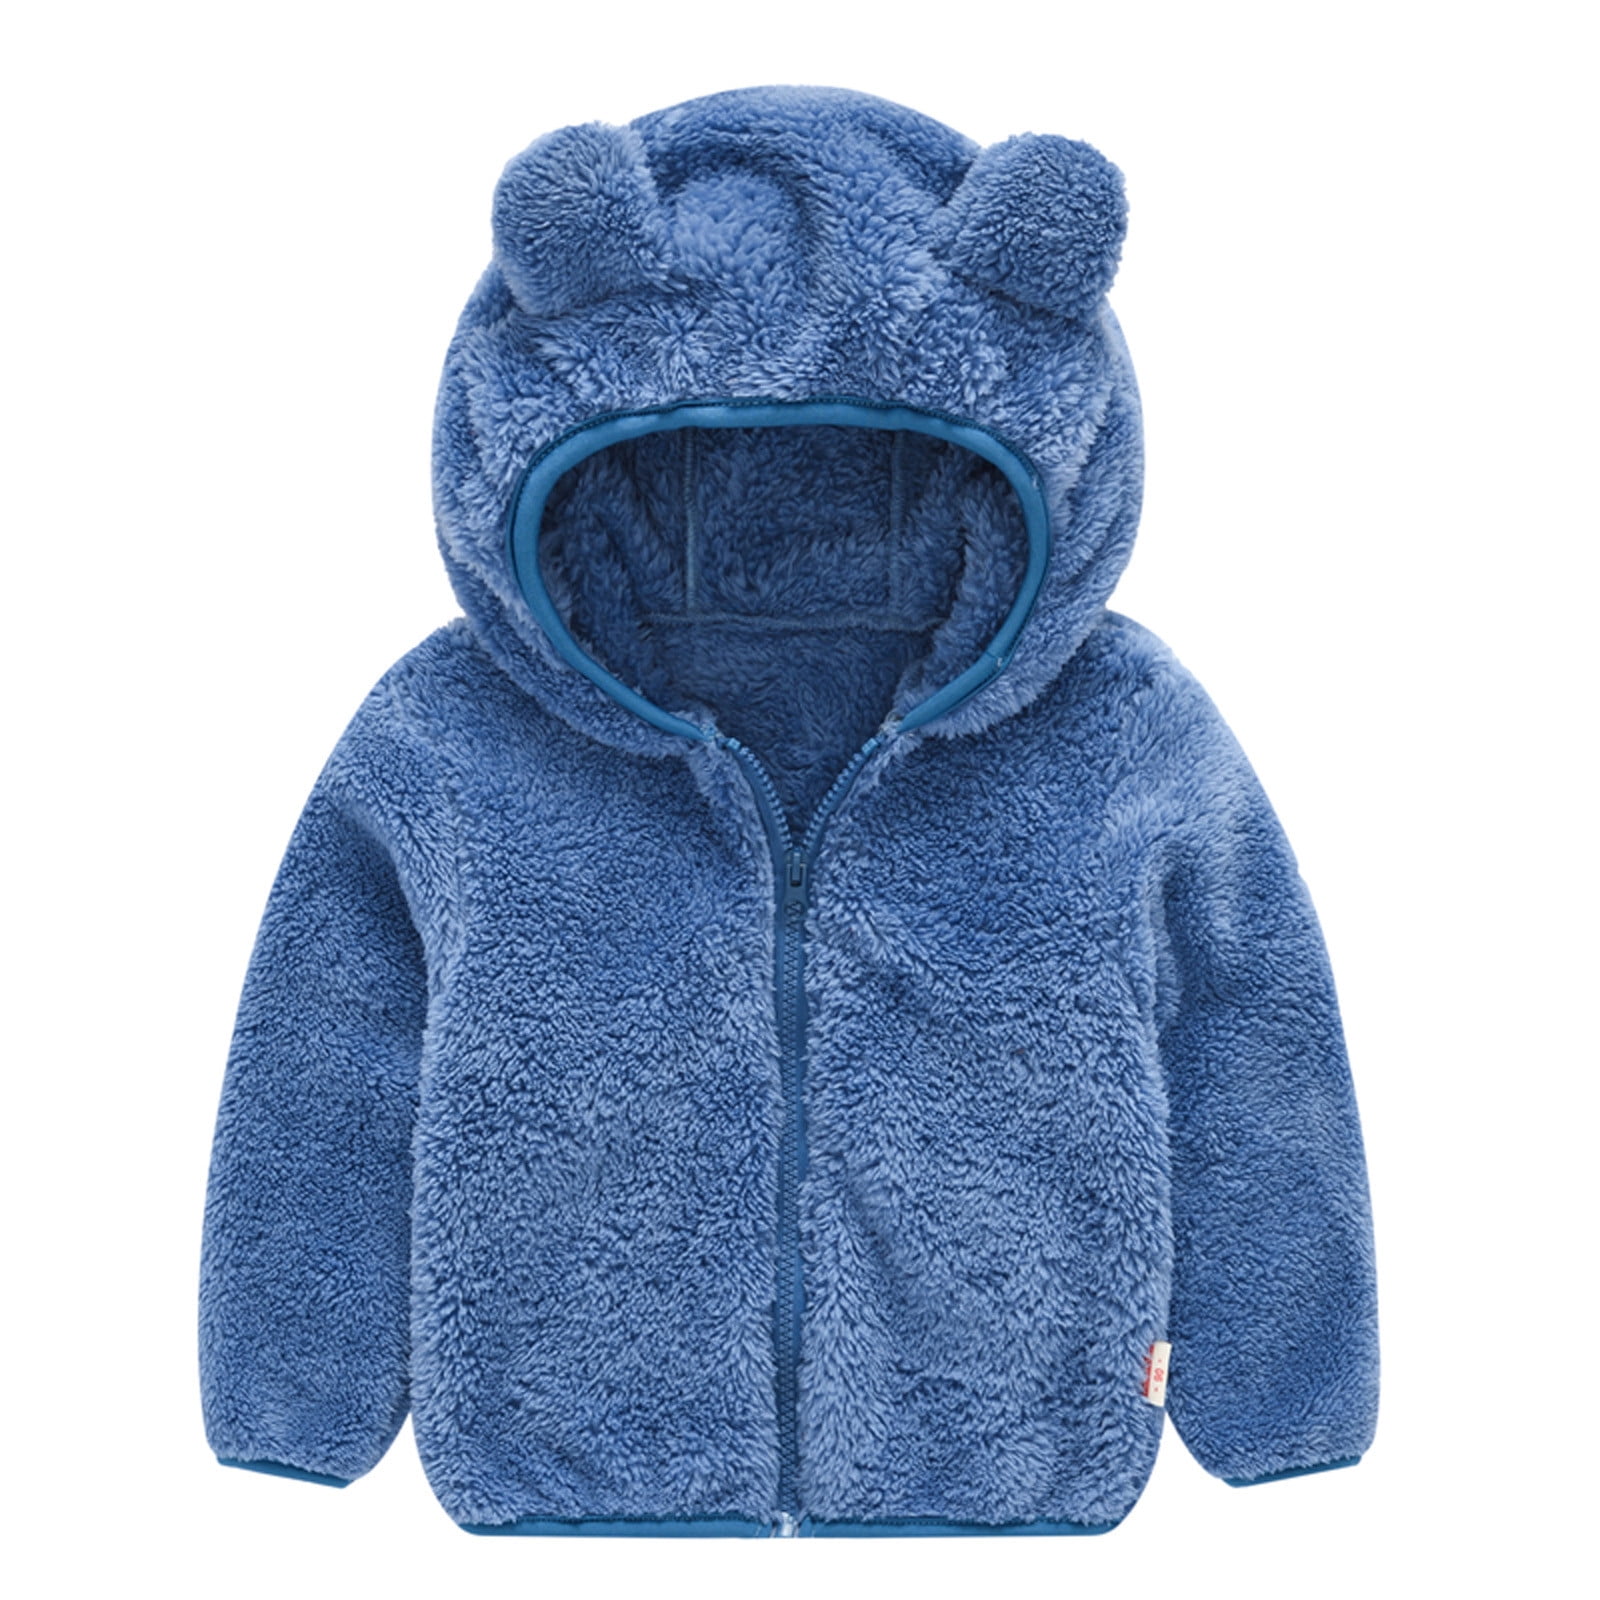 Toddler Baby Kids Girls Winter Windproof Thicken Coat Jacket Fleece Outerwear 